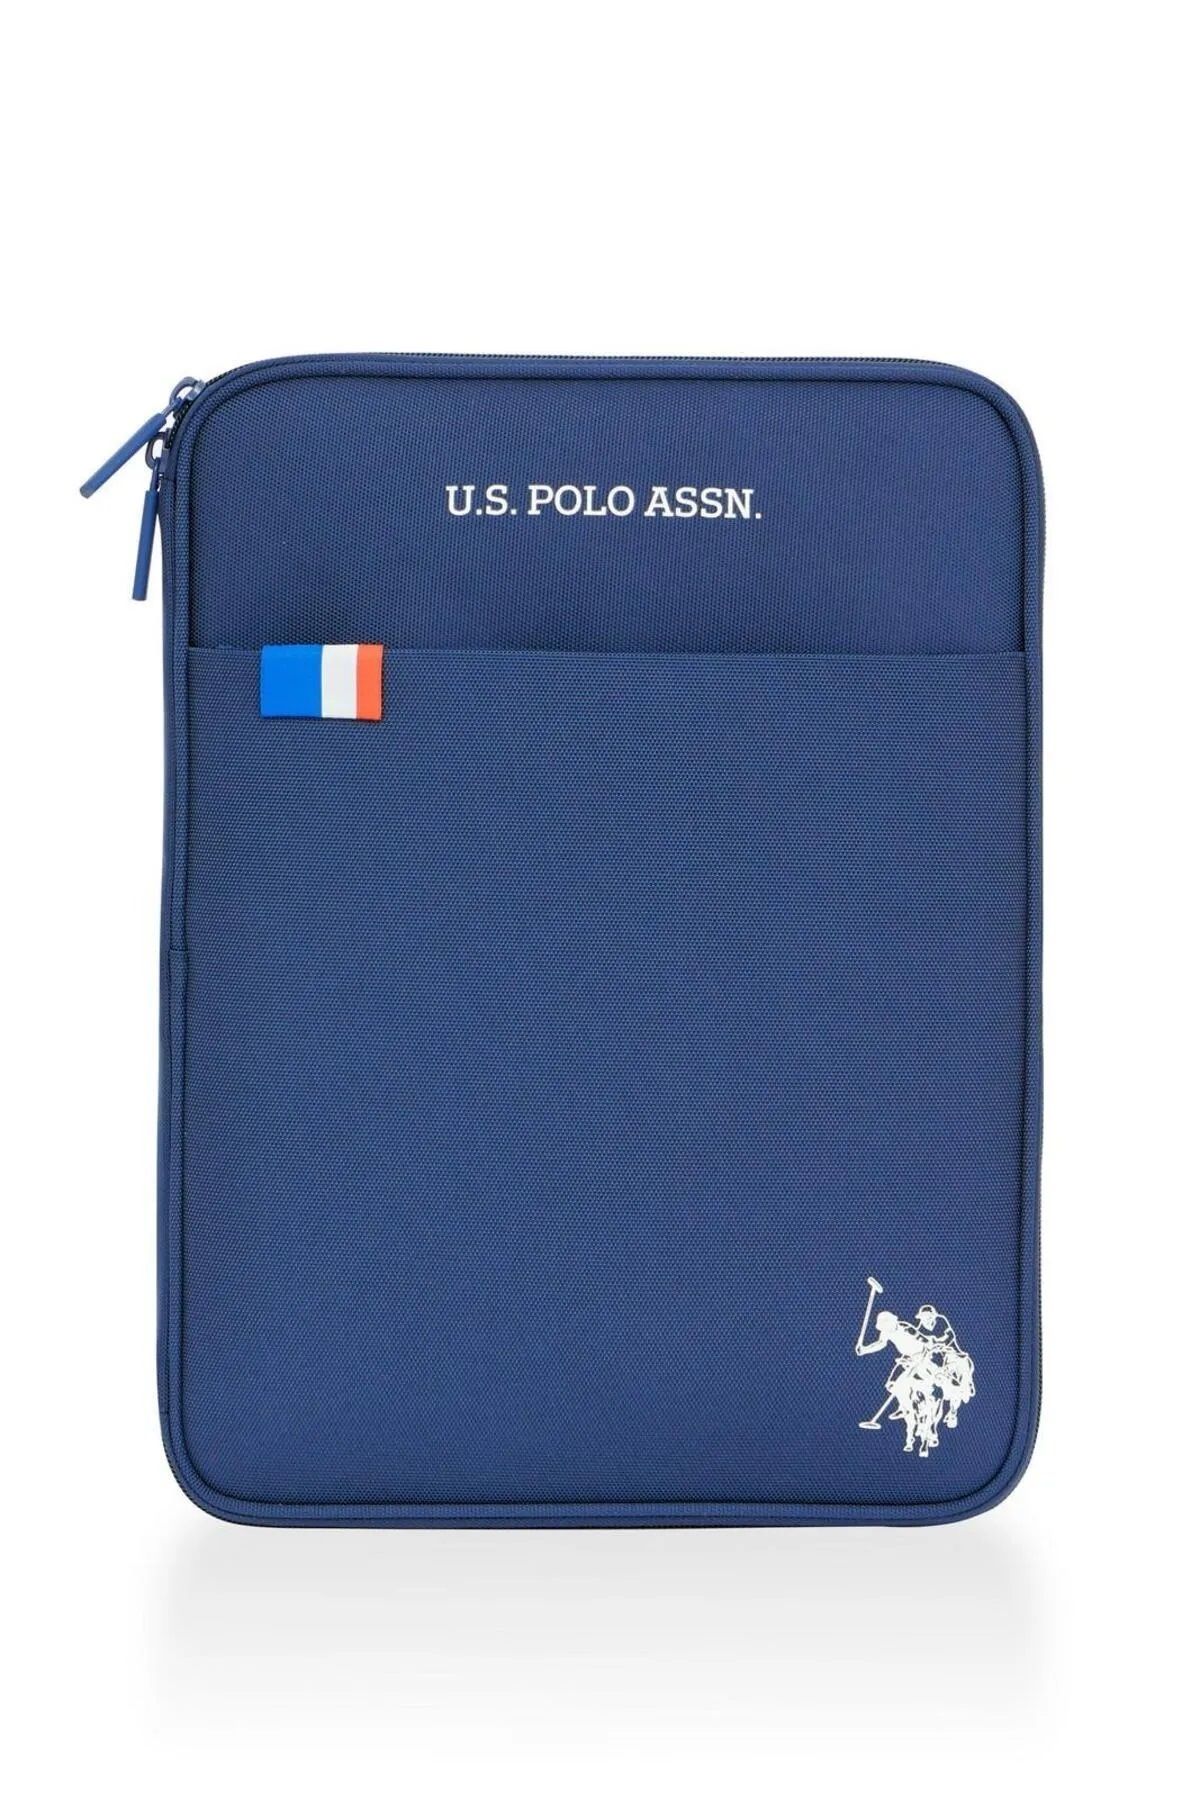 U.S. Polo Assn. U.S. Polo Assn. 23702 Unisex Laptop Bölmeli Evrak Çantası LACİVERT